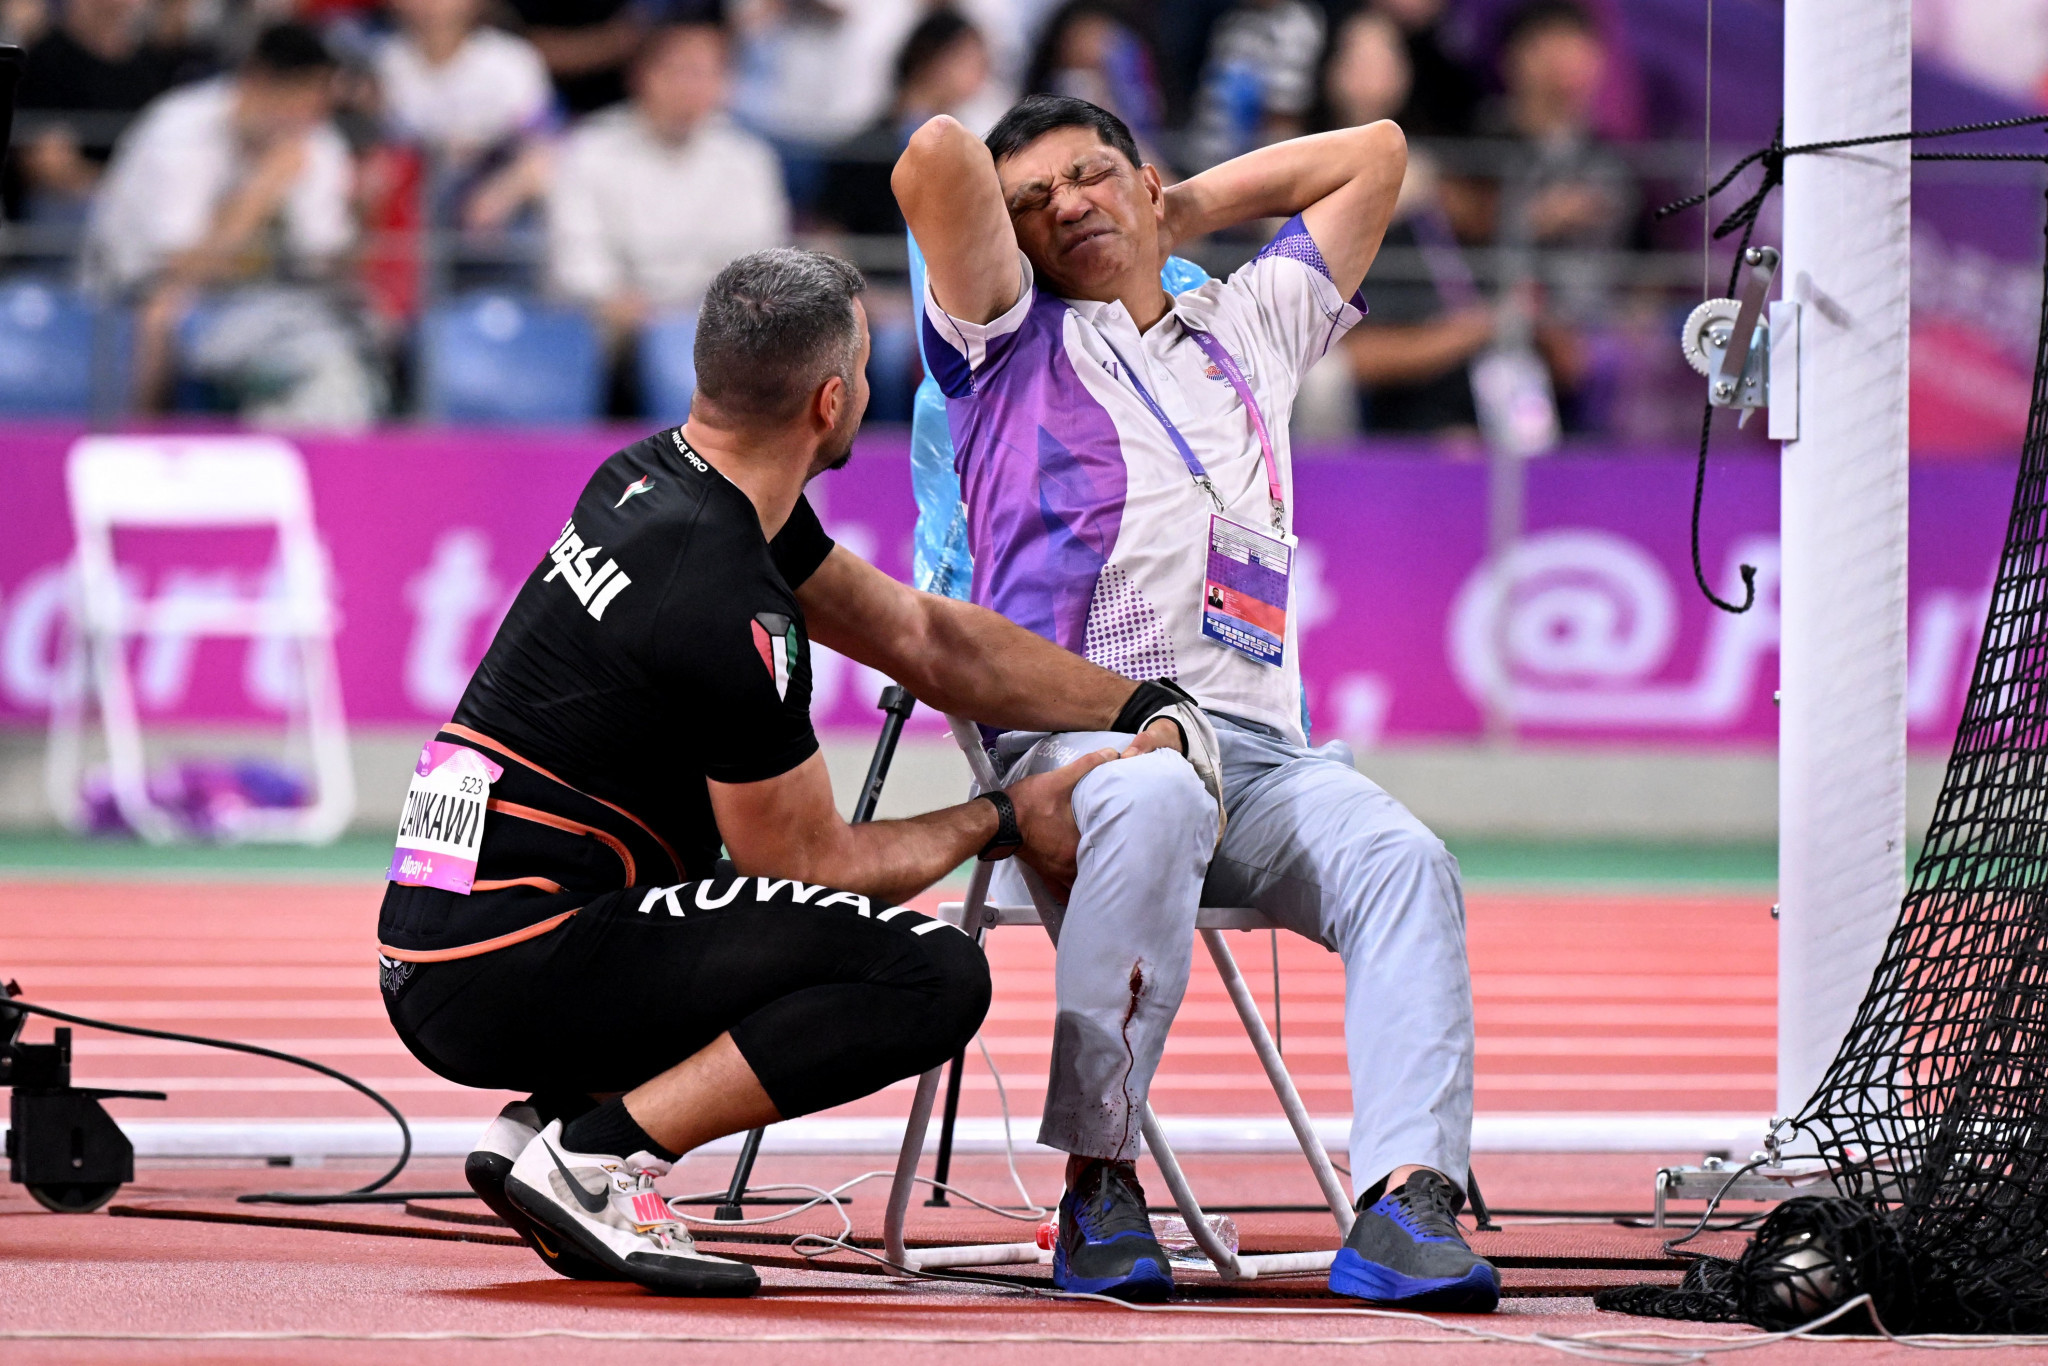 Athletics official suffers broken leg in hammer throw at Hangzhou 2022